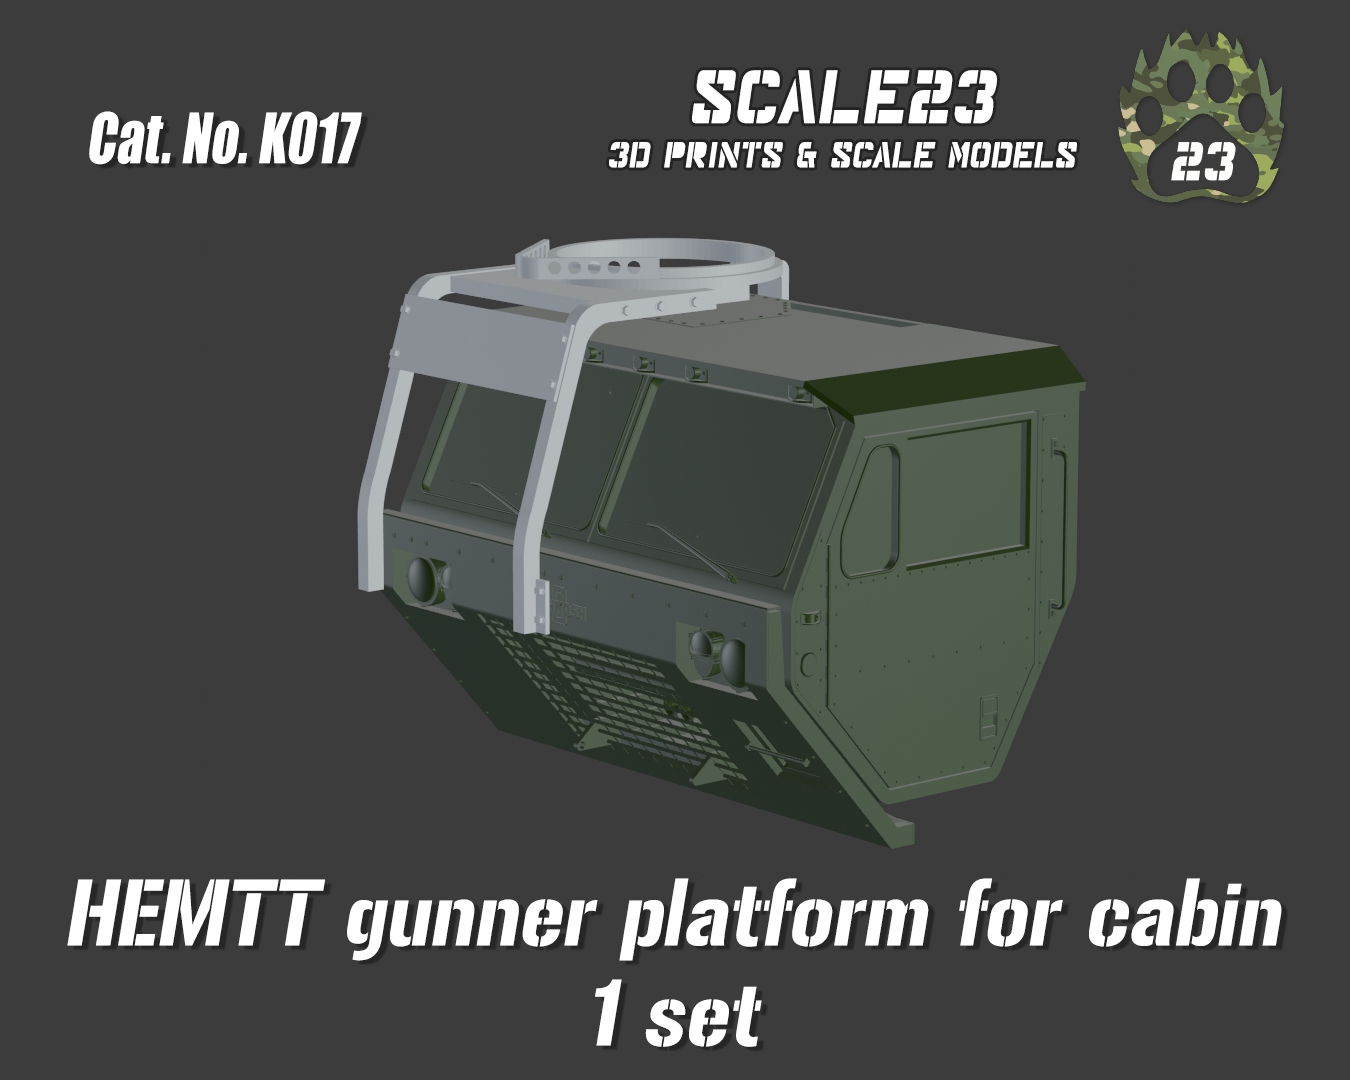 HEMTT cabin gunner platform